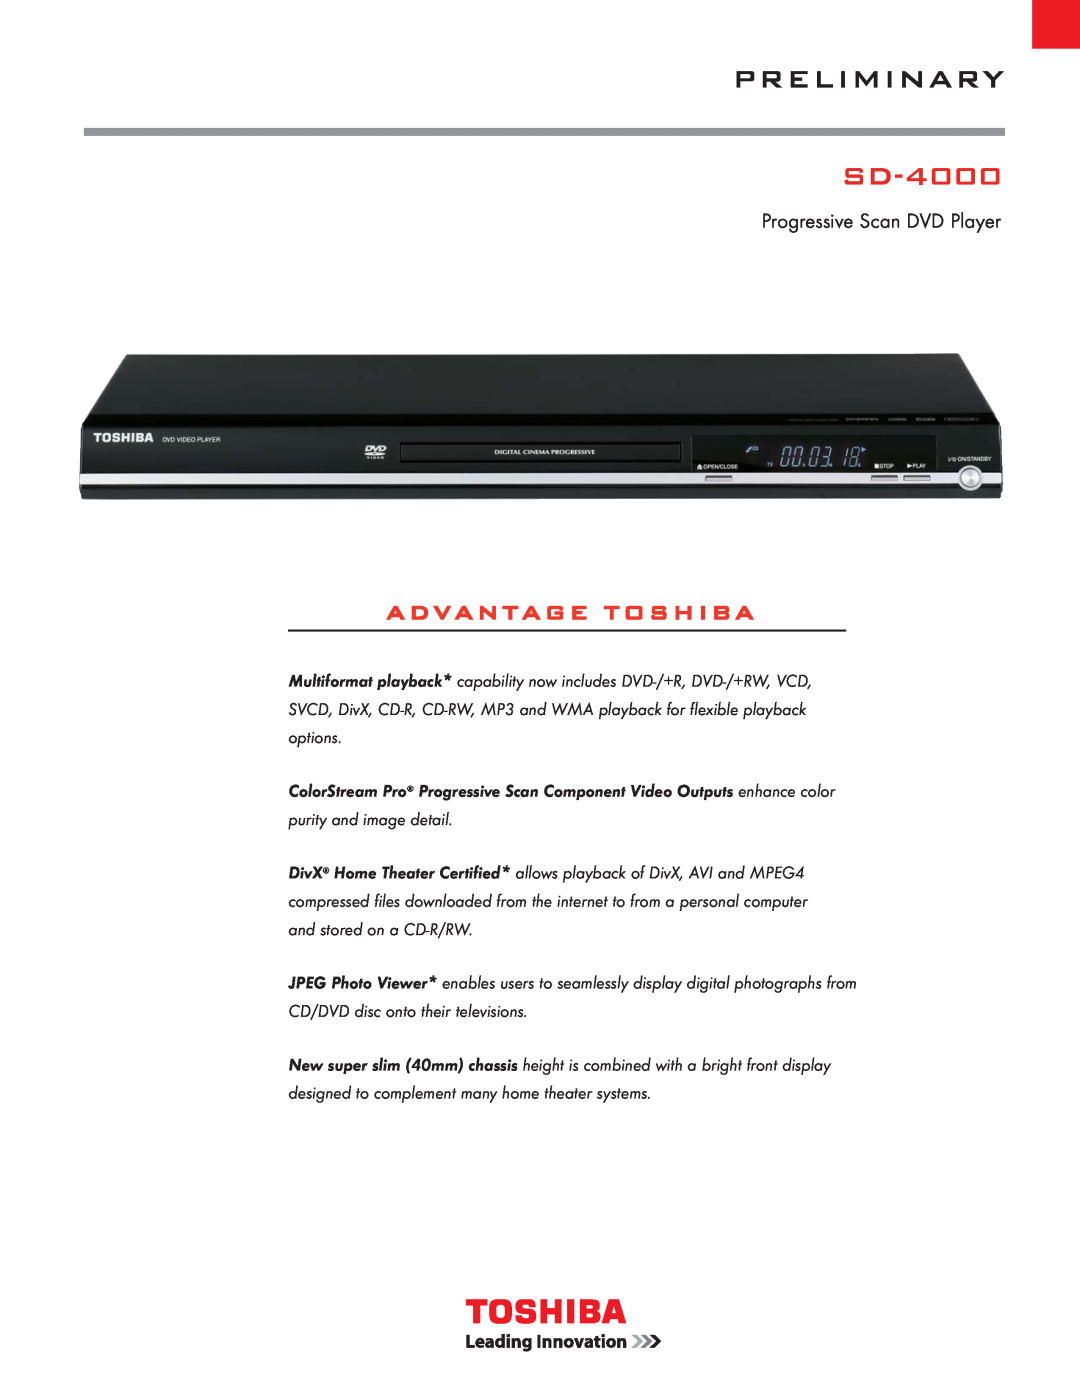 Toshiba SD-4000 manual Preliminary, Advantage Toshiba, Progressive Scan DVD Player 